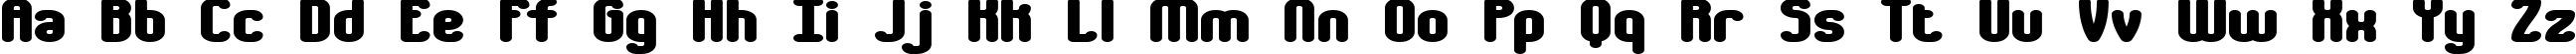 Пример написания английского алфавита шрифтом Chumbly BRK